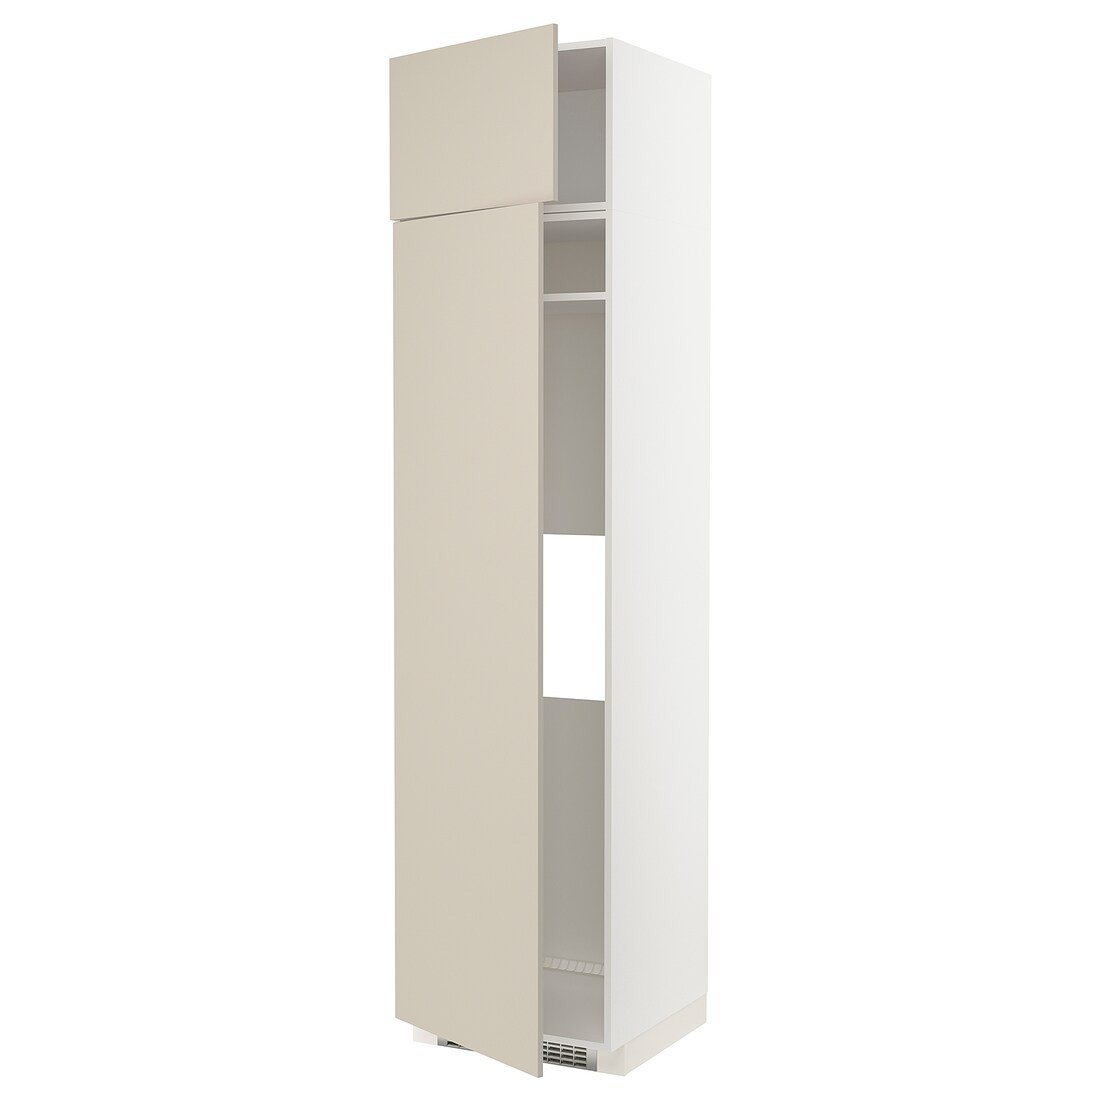 IKEA METOD МЕТОД Высокий шкаф для холодильника / морозильника, белый / Havstorp бежевый, 60x60x240 см 59458129 | 594.581.29